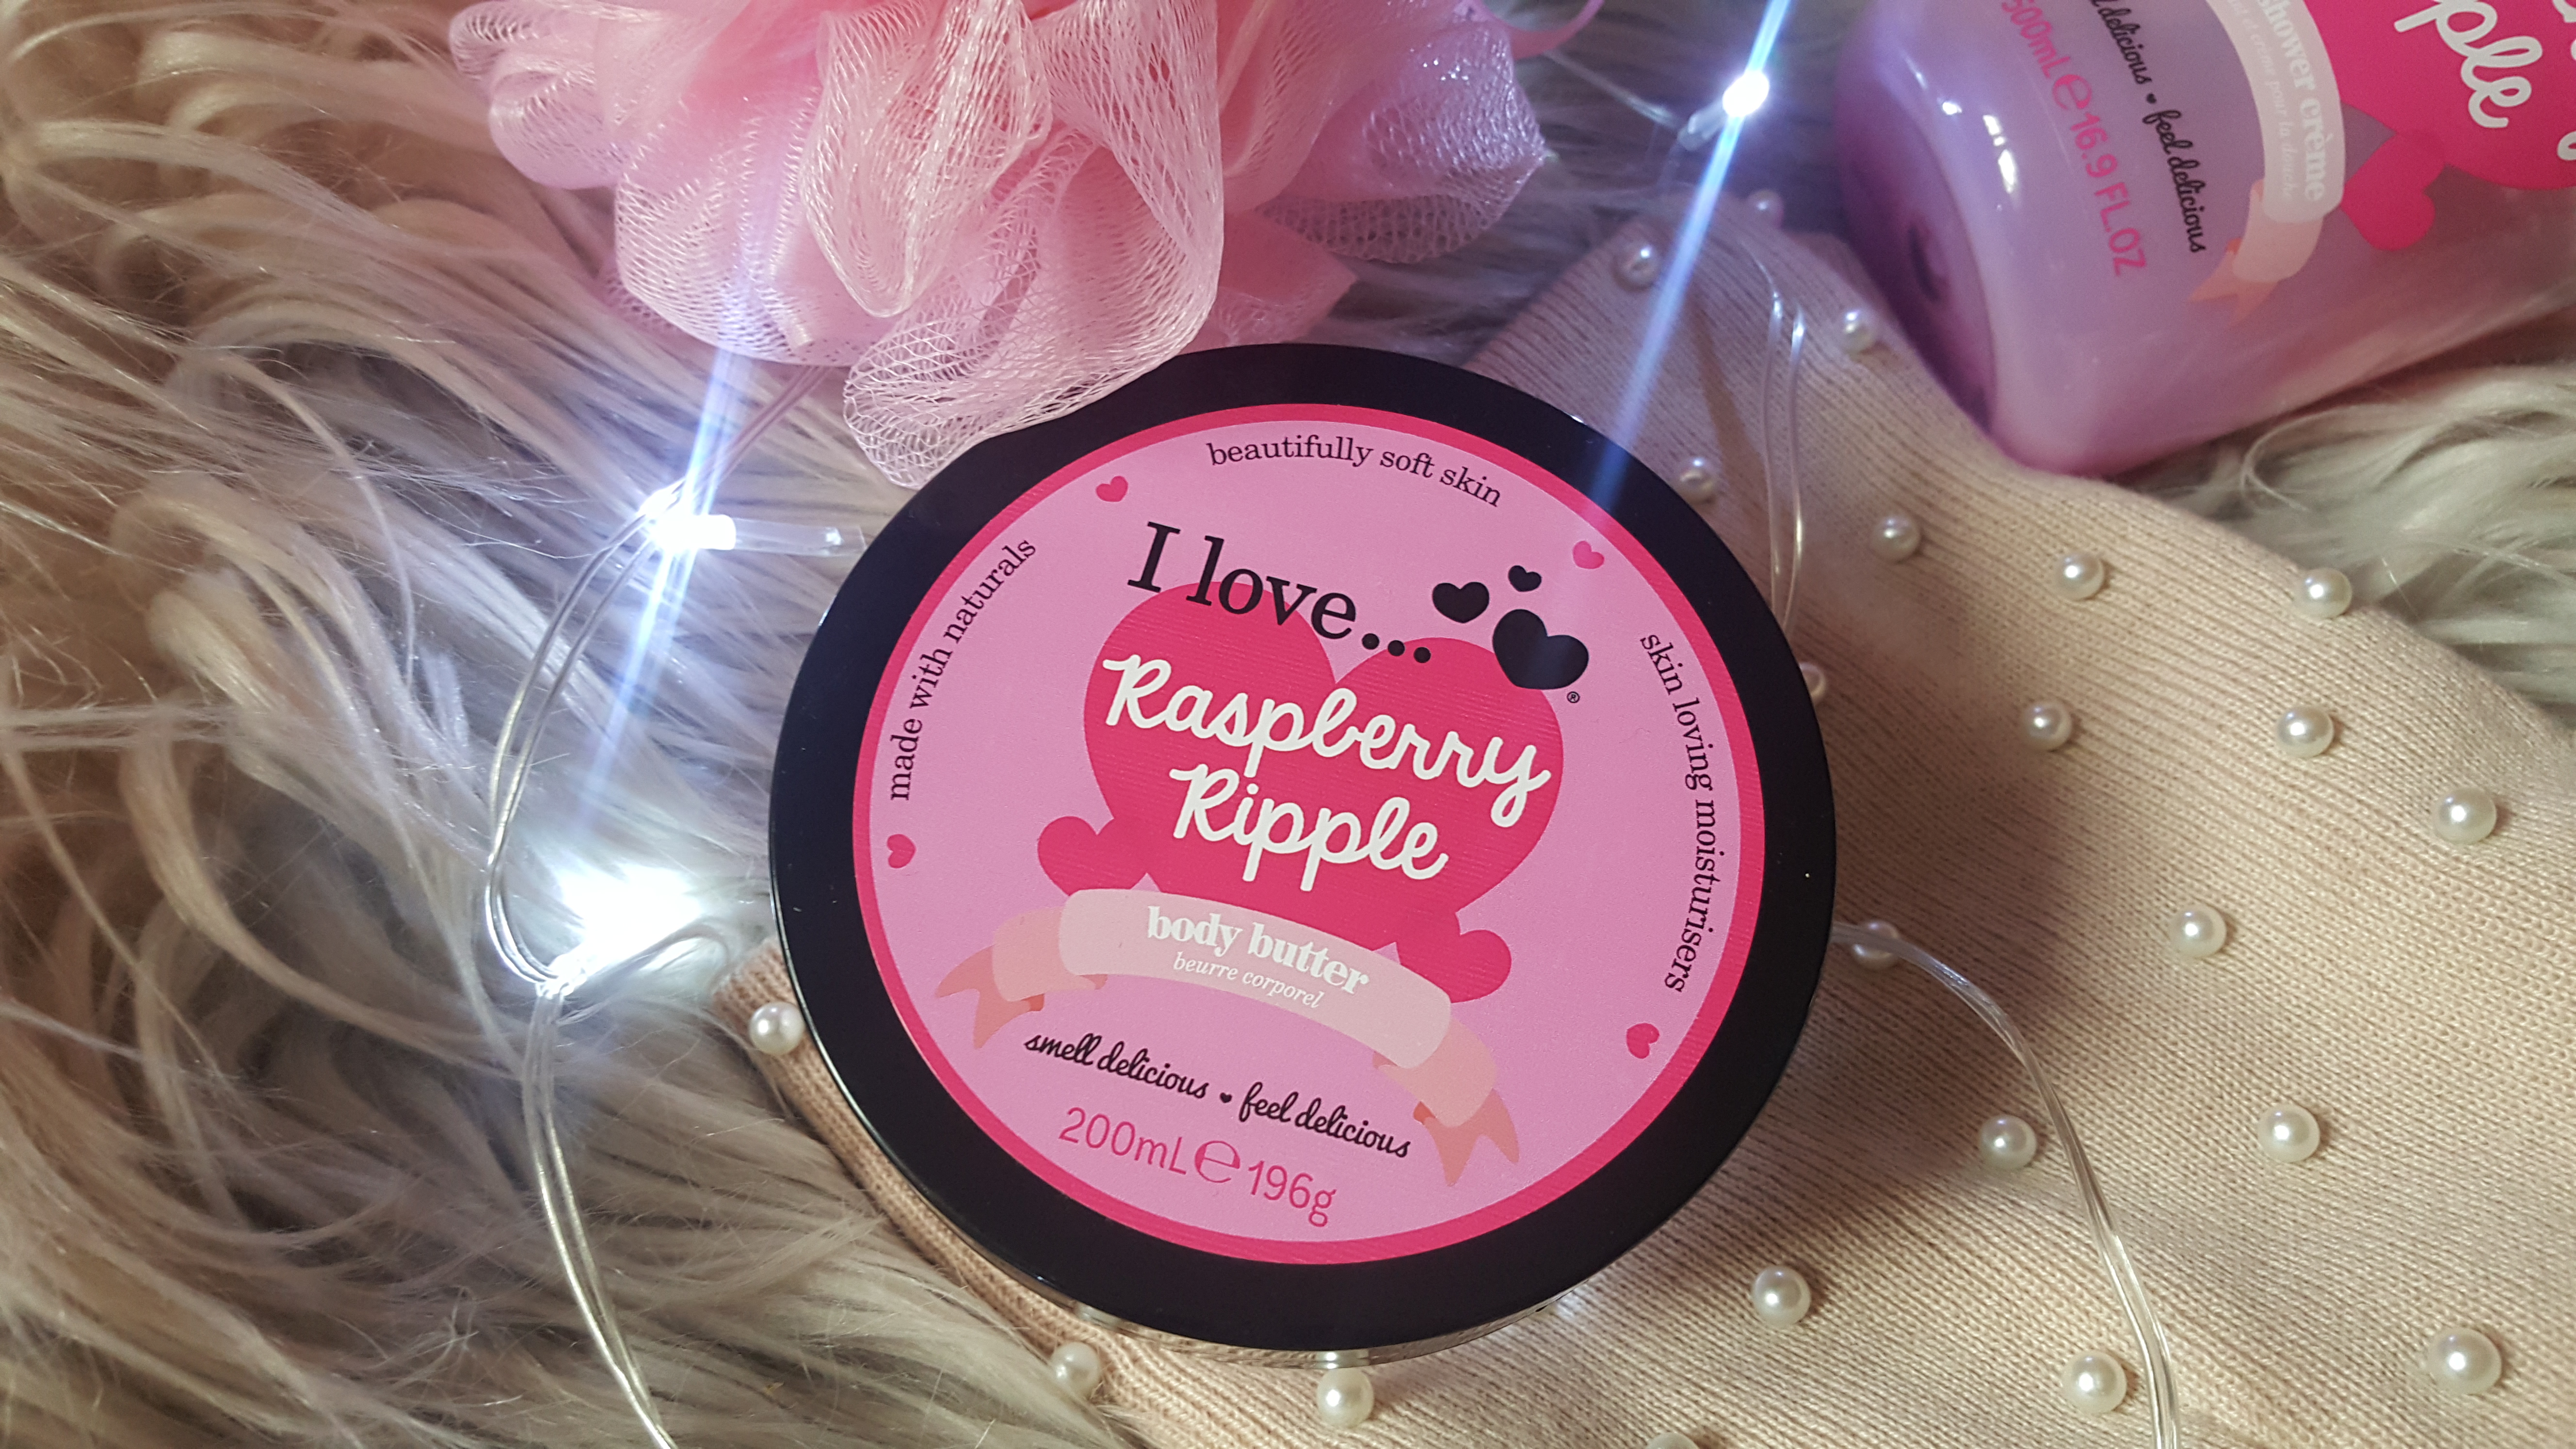 I love cosmetics Raspberry Ripple